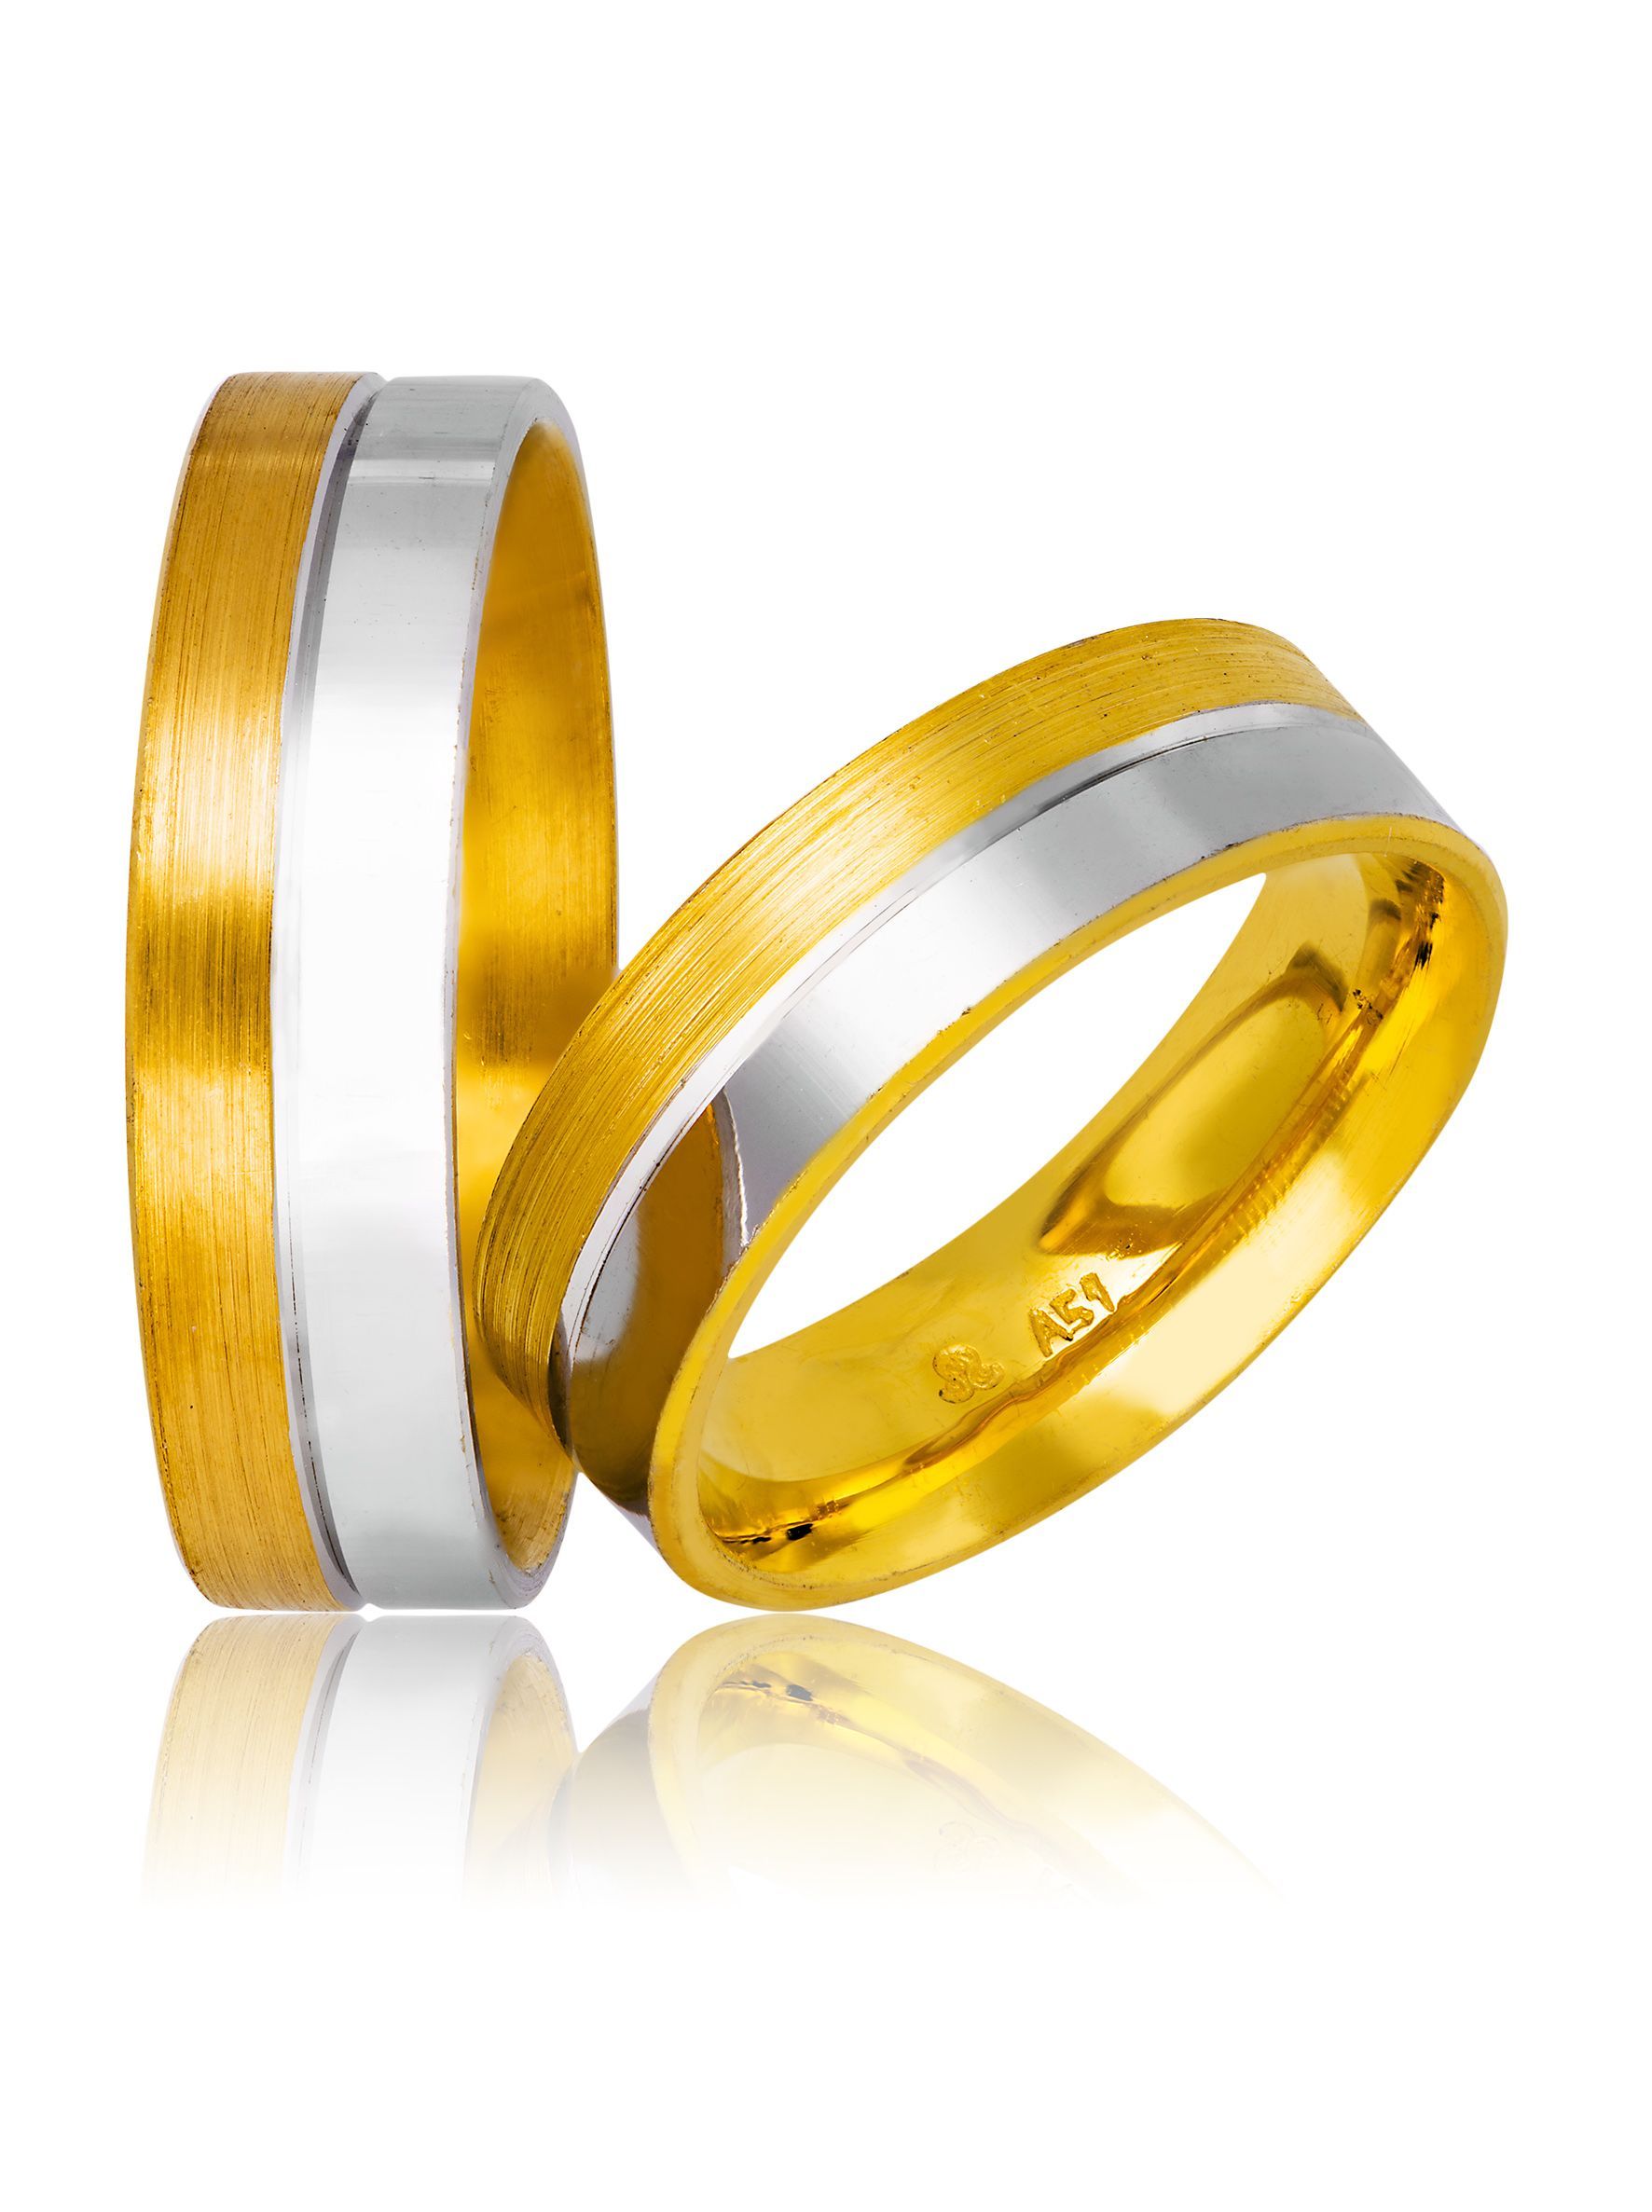 White gold & gold wedding rings 6mm (code 741)